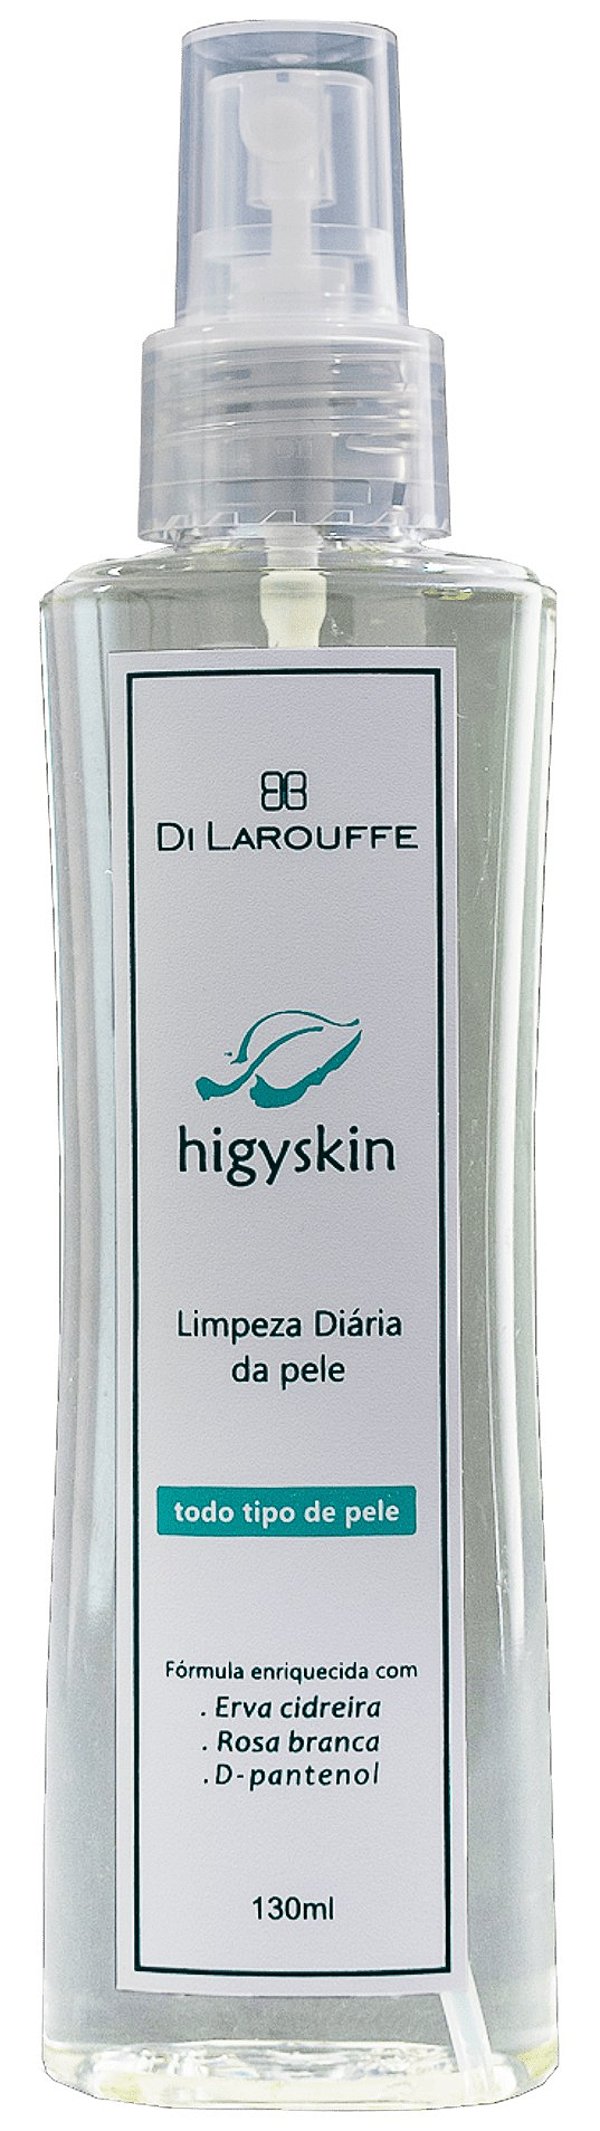 Higyskin - limpa e equilibra a pele (limpeza 3 em1)